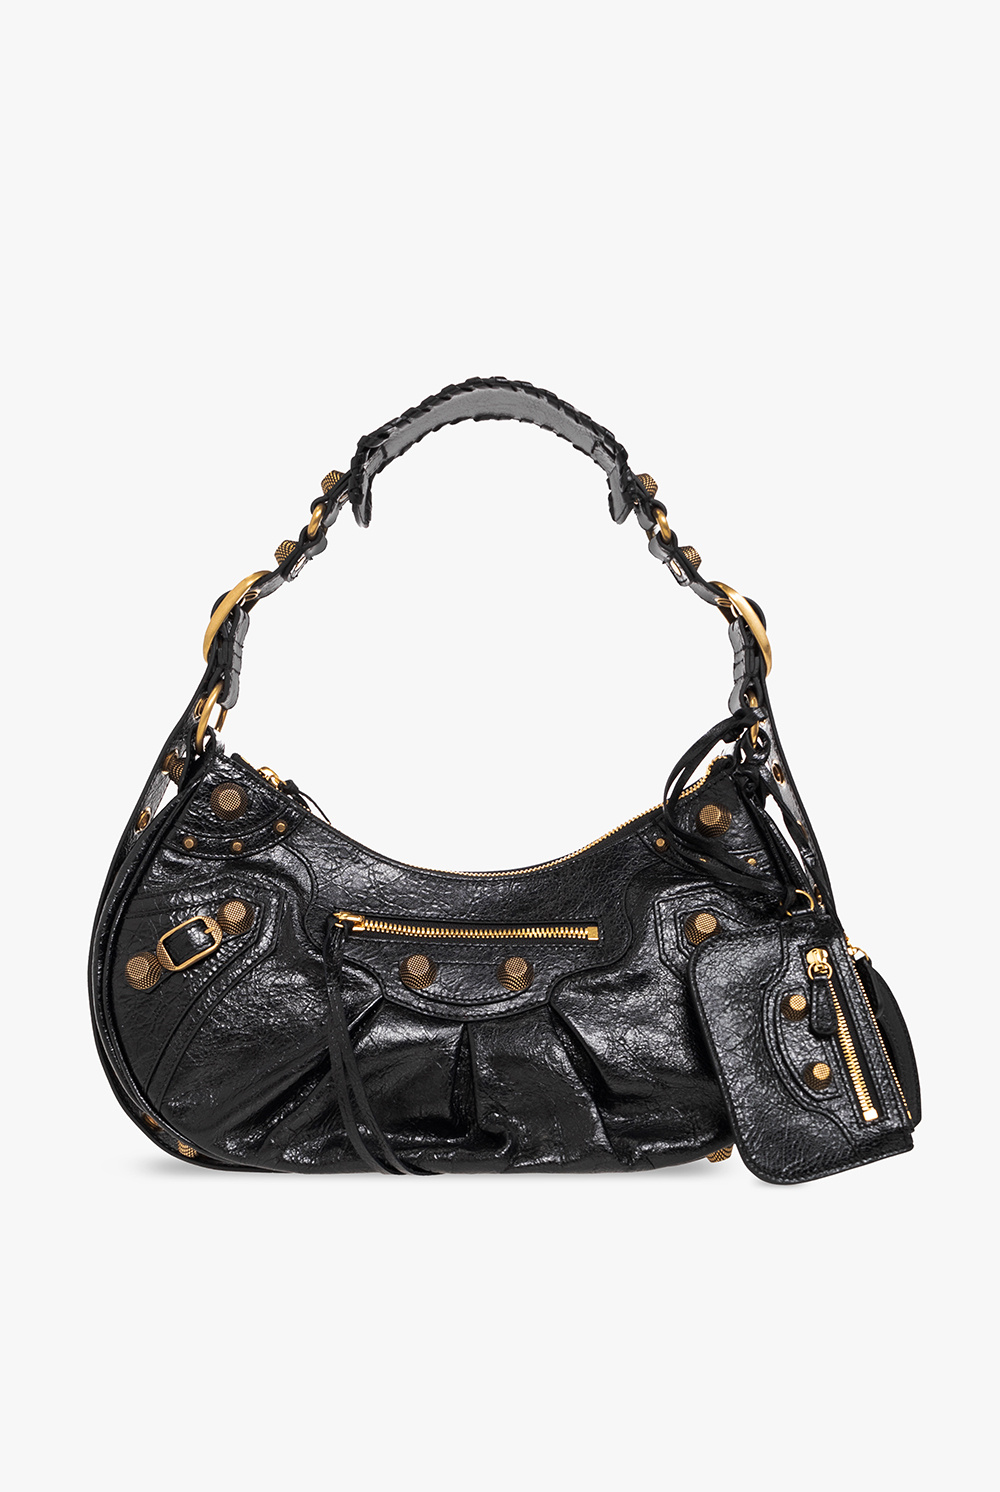 Balenciaga Black Lambskin Leather Travel Clutch Bag  Yoogis Closet